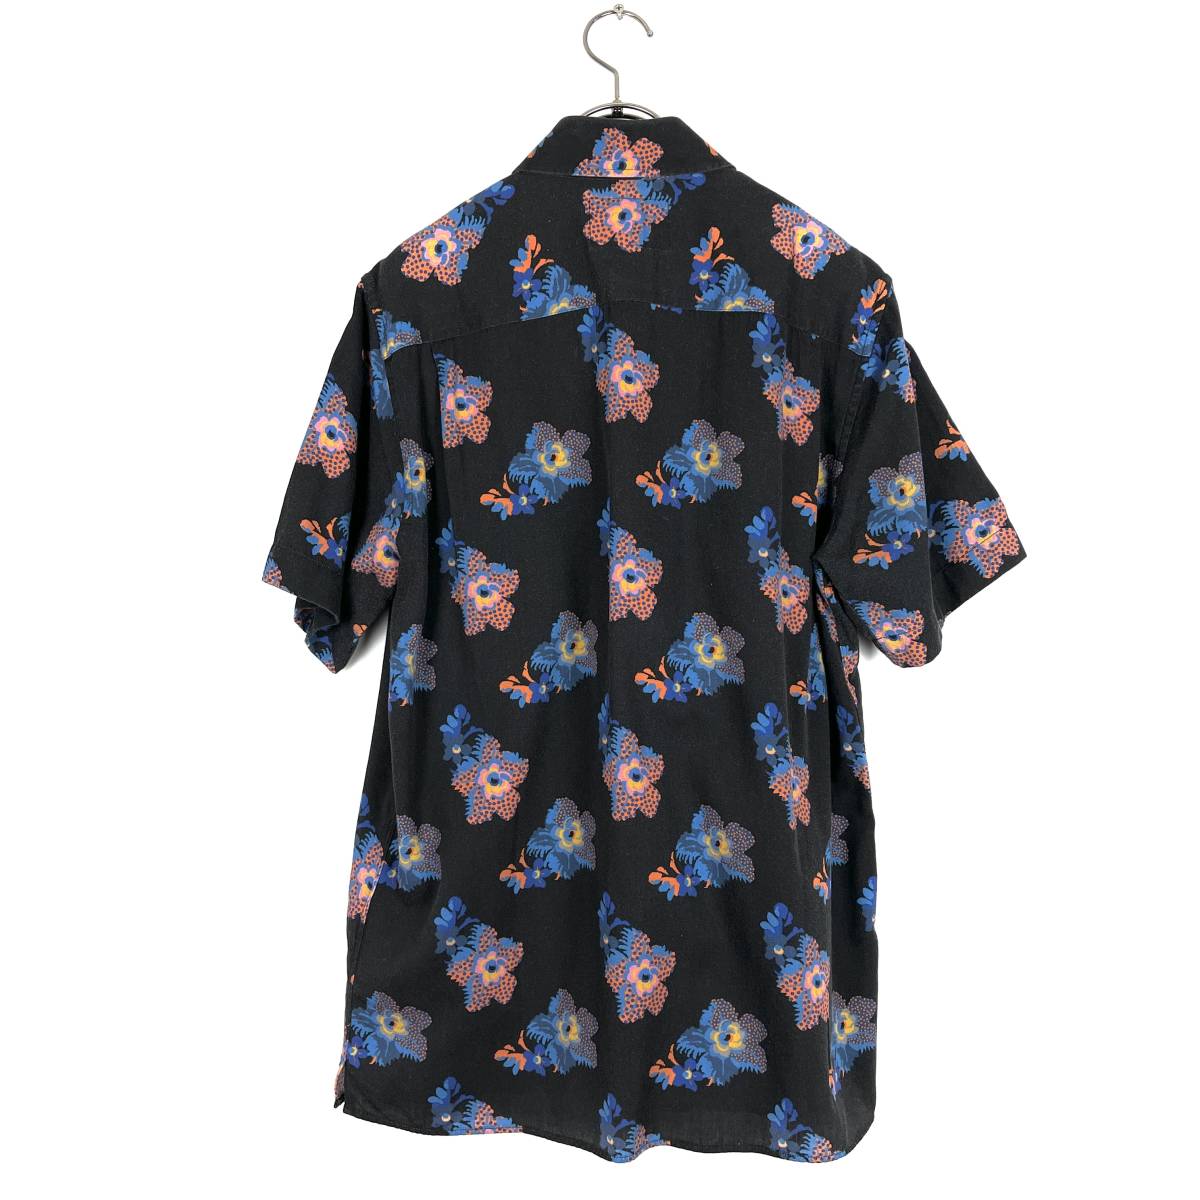 MARC JACOBS(マークジェイコブス) flower print s/s shirts 14SS